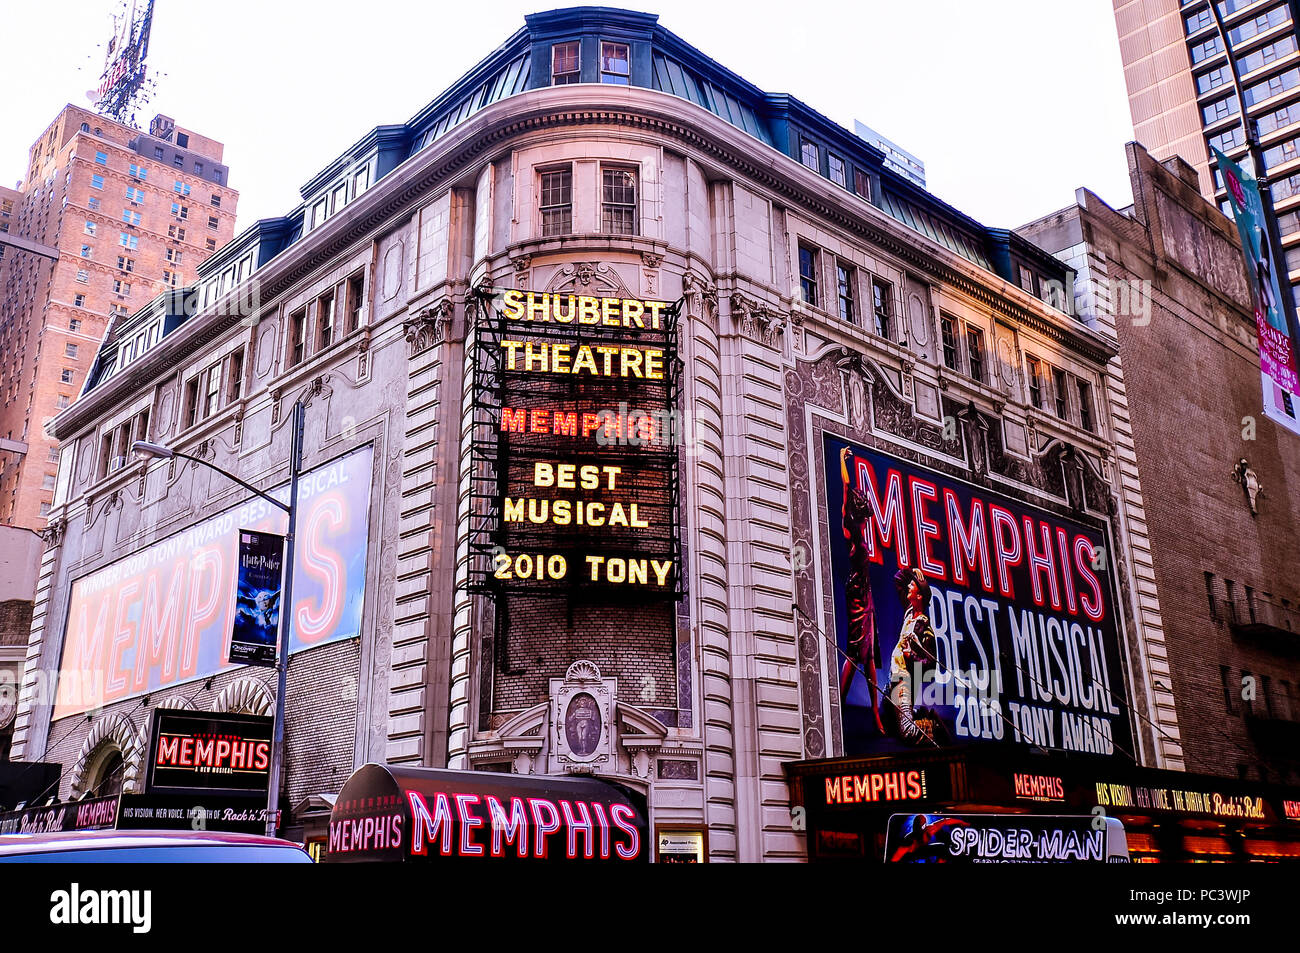 New York, NY?USA - Jun. 8, 2011: Schubert Theatre - a Broadway theatre located on 44th Street, Midtown Manhattan, NY. Stock Photo